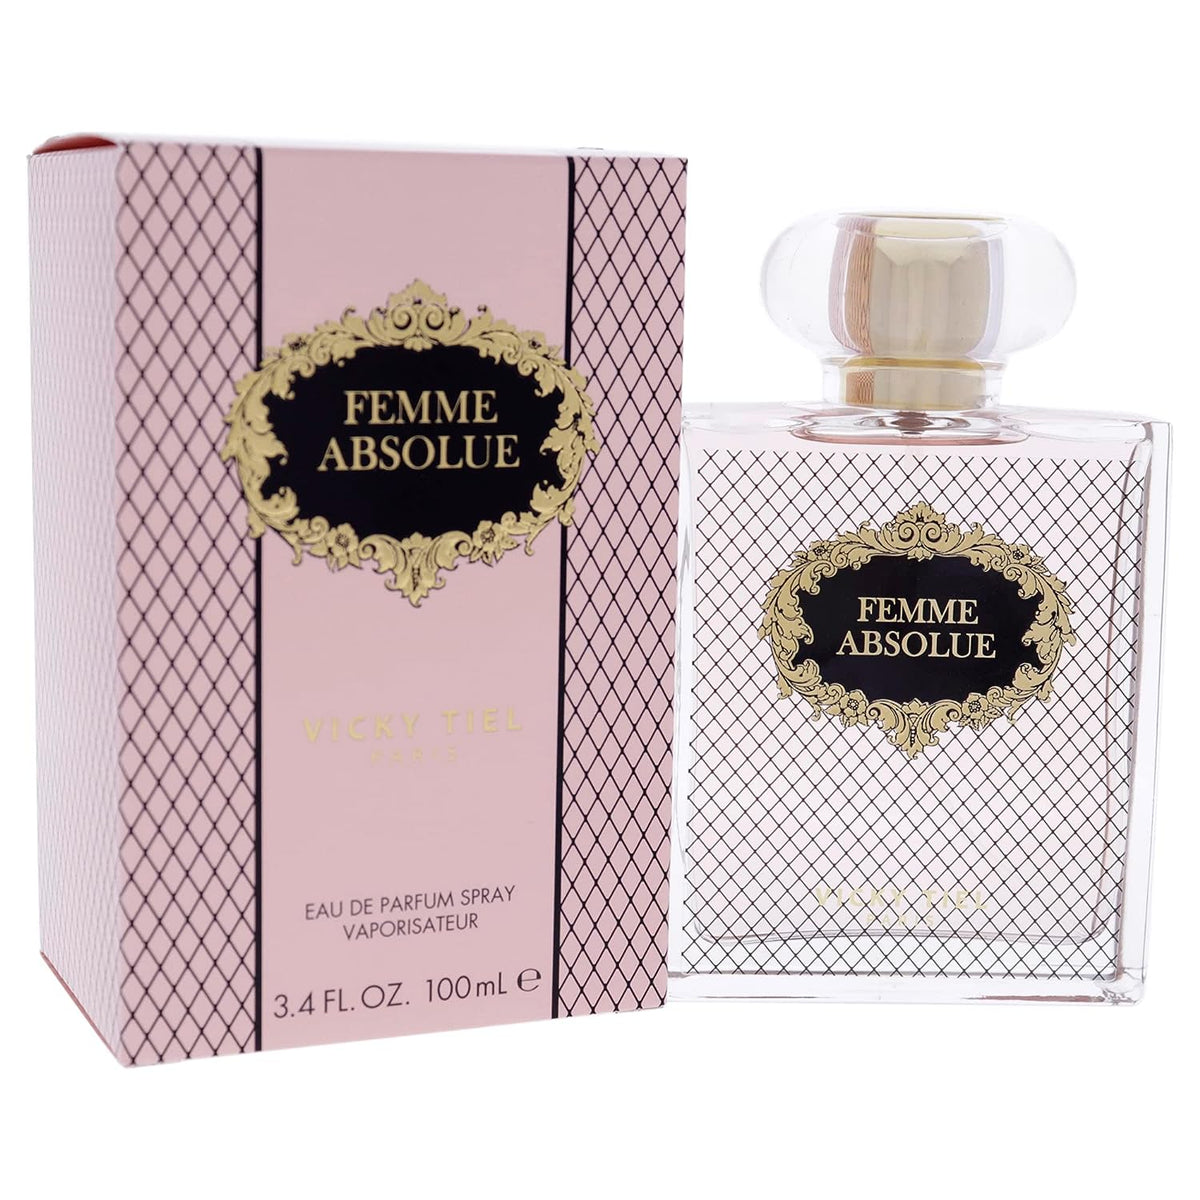 Vince Camuto Femme For Women Perfume Eau de Parfum 3.4 oz ~ 100 ml EDP Spray